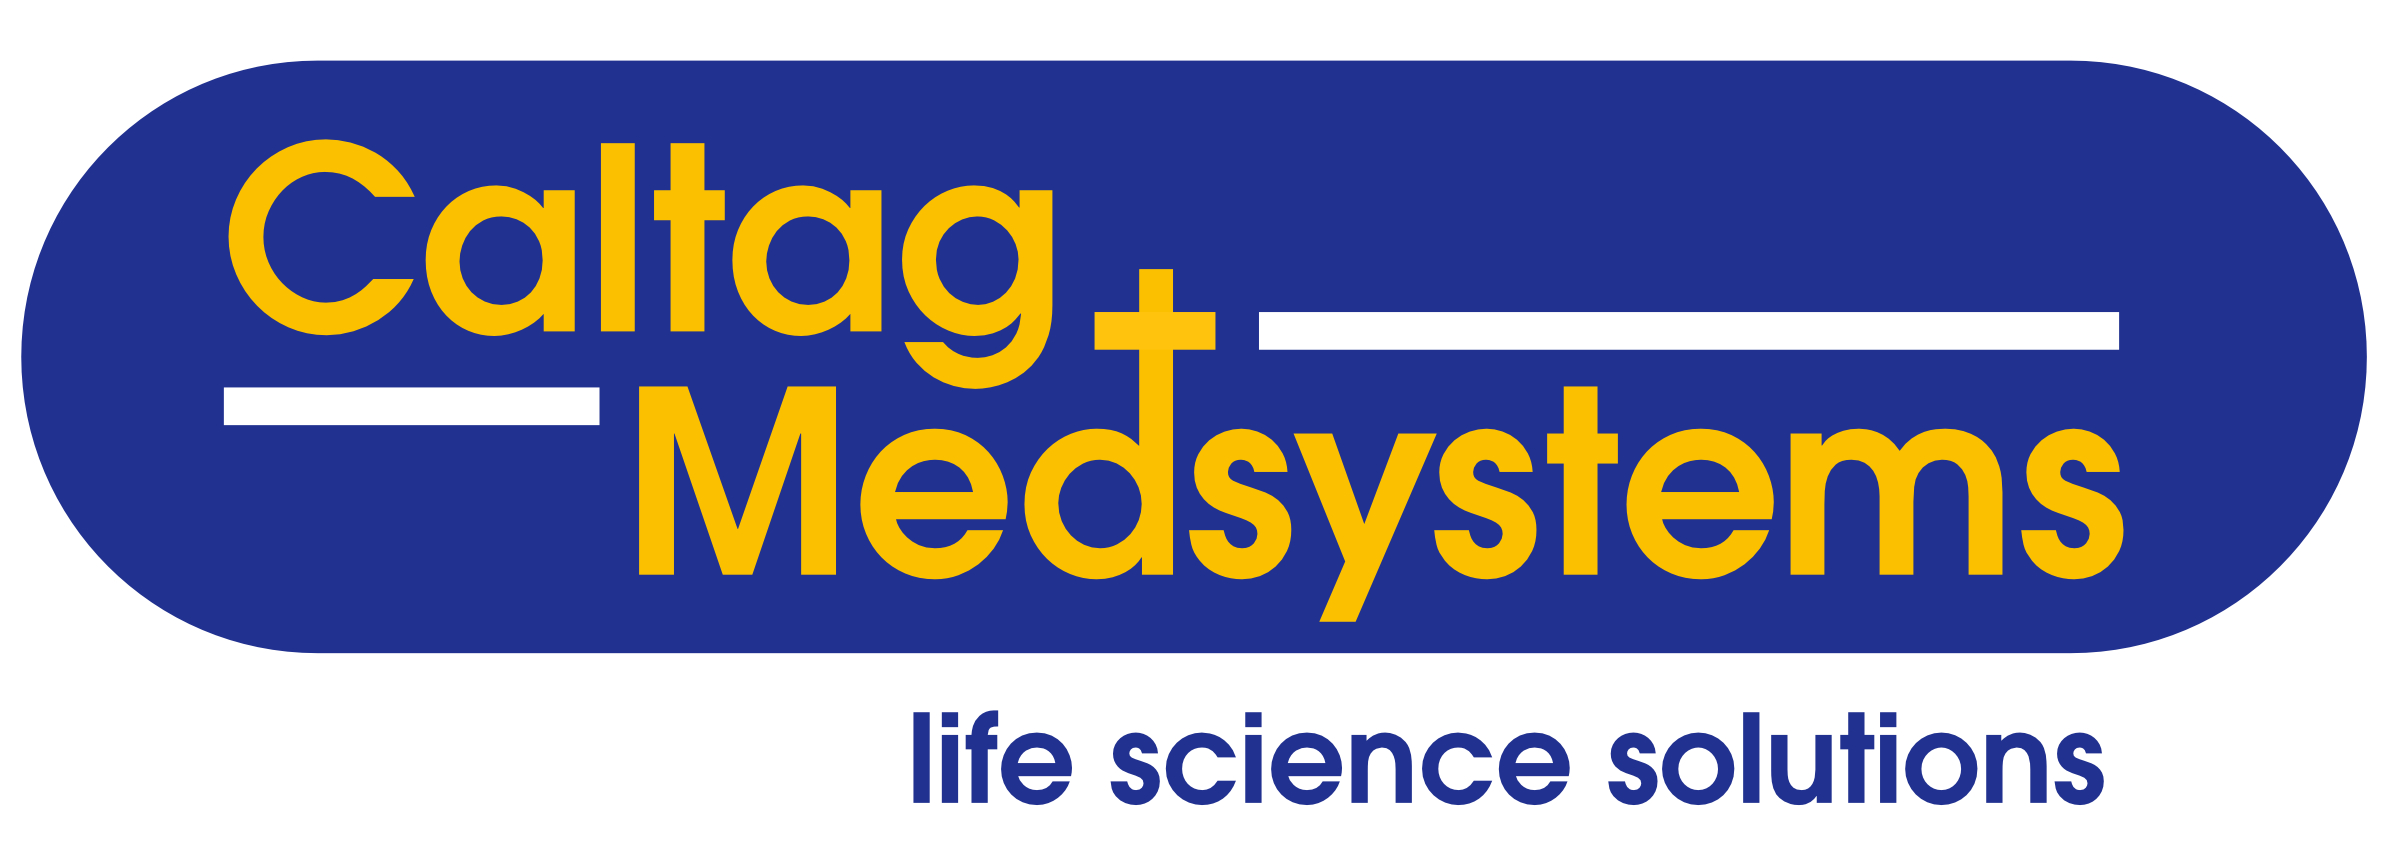 Caltag Medsystems logo